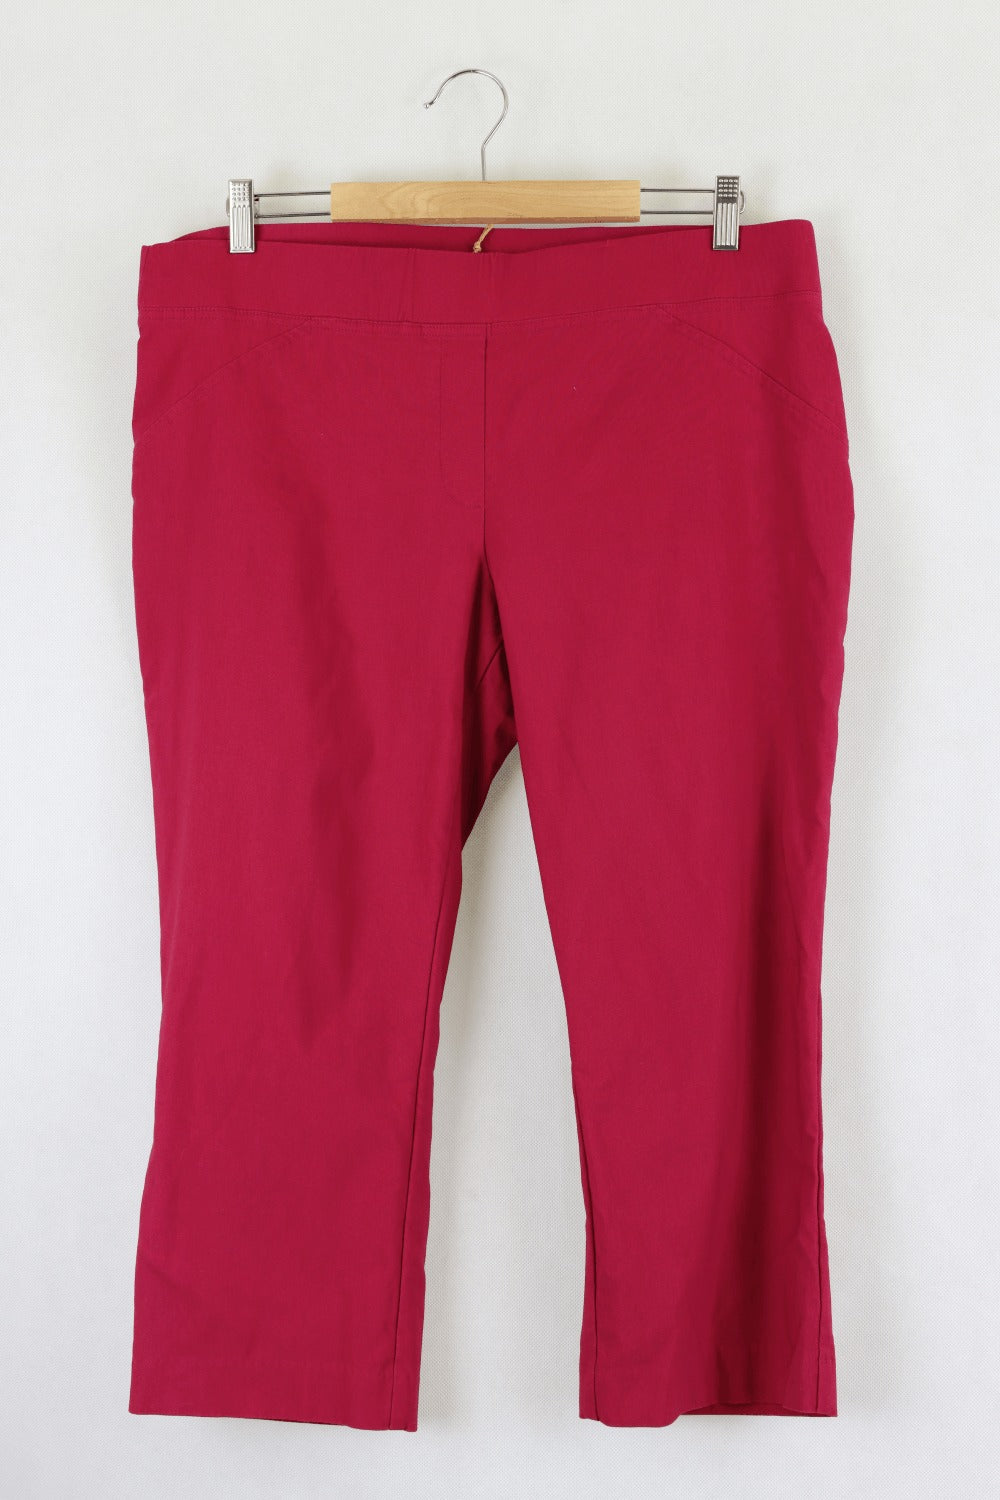 Regatta Pink Pants 16 - Reluv Clothing Australia